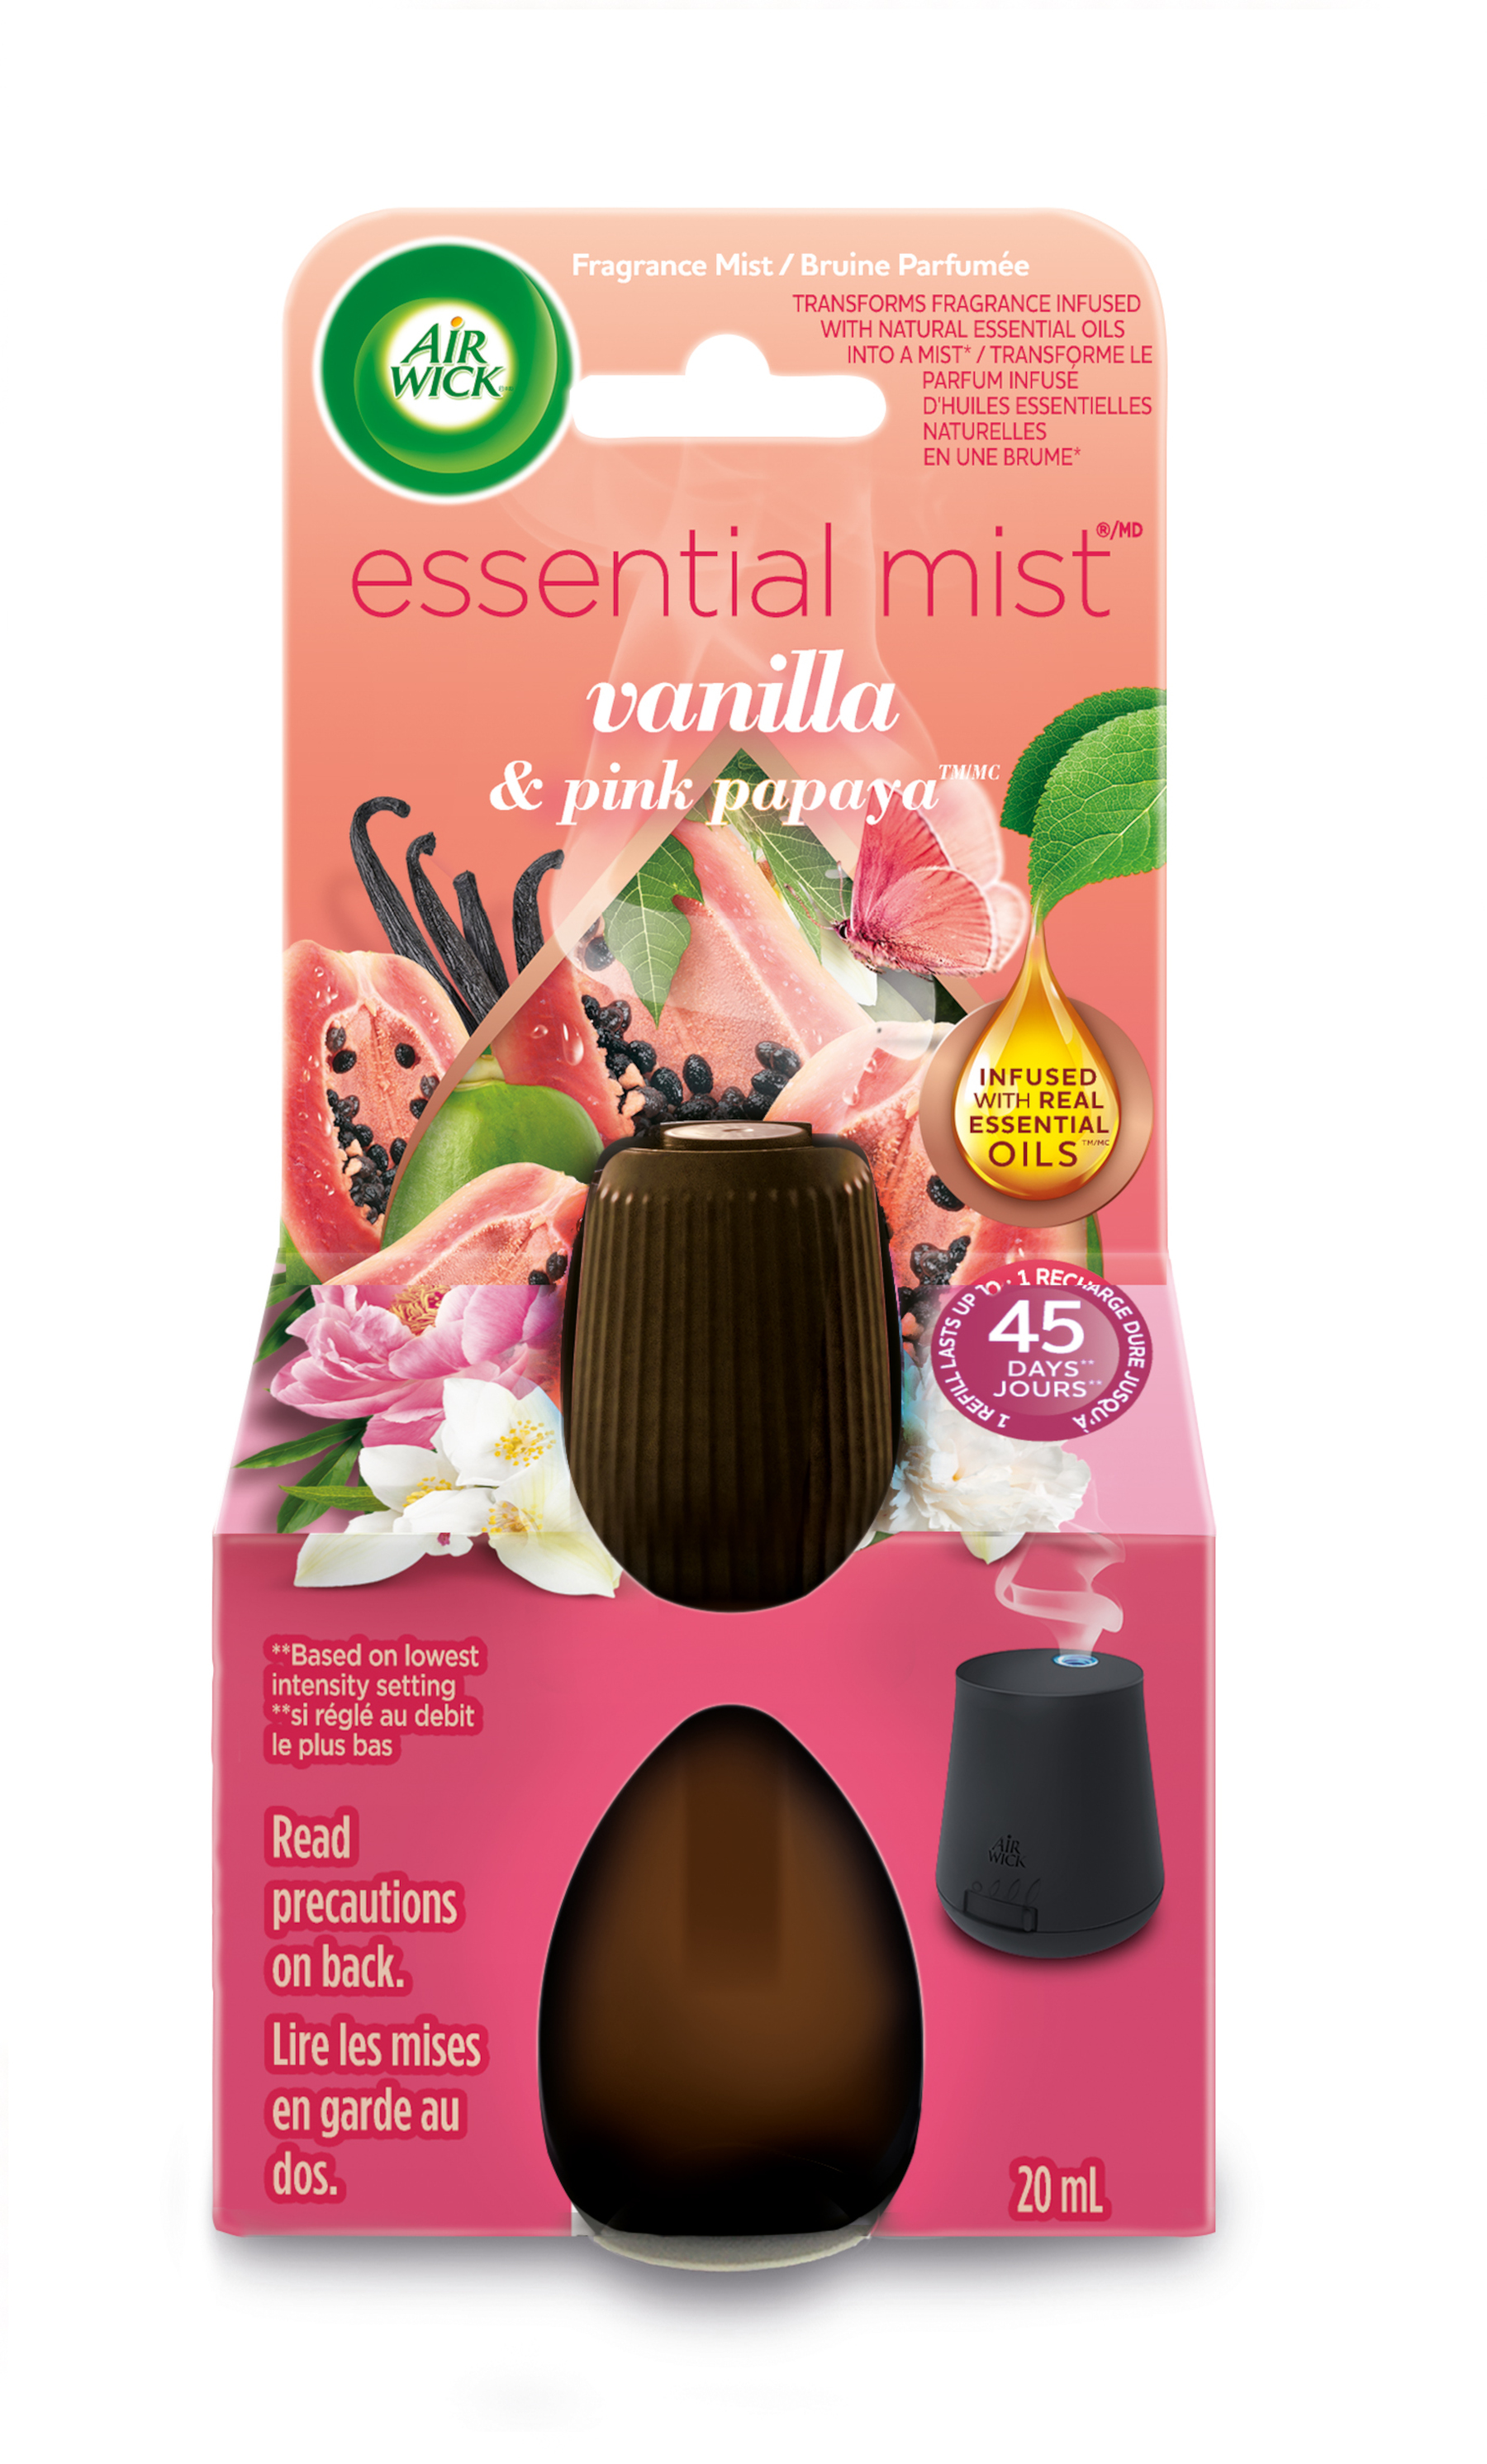 AIR WICK® Essential Mist - Vanilla & Pink Papaya (Canada)